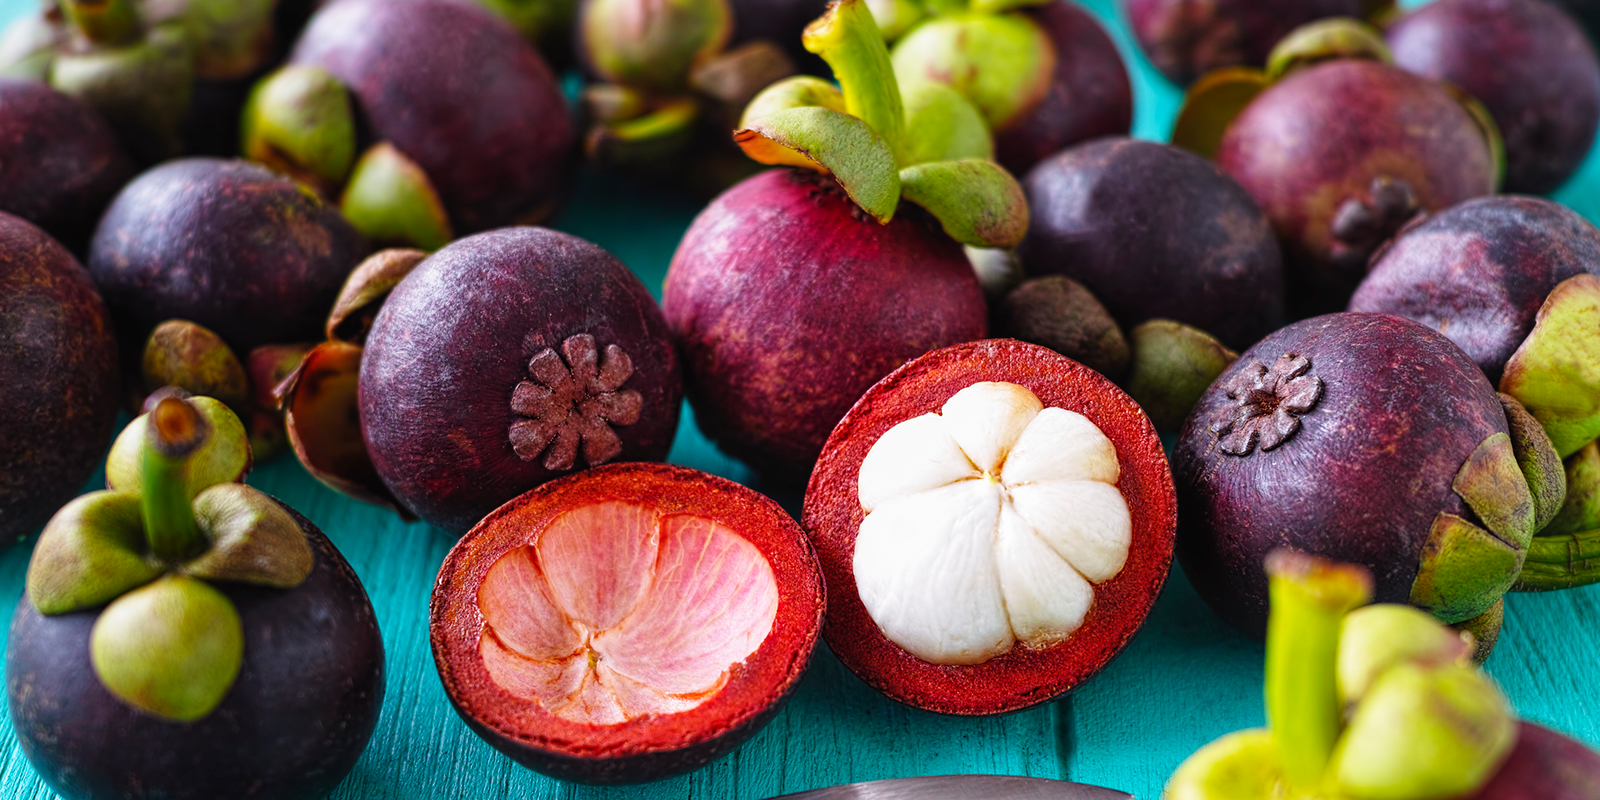 What does a Mangosteen fruit taste like?